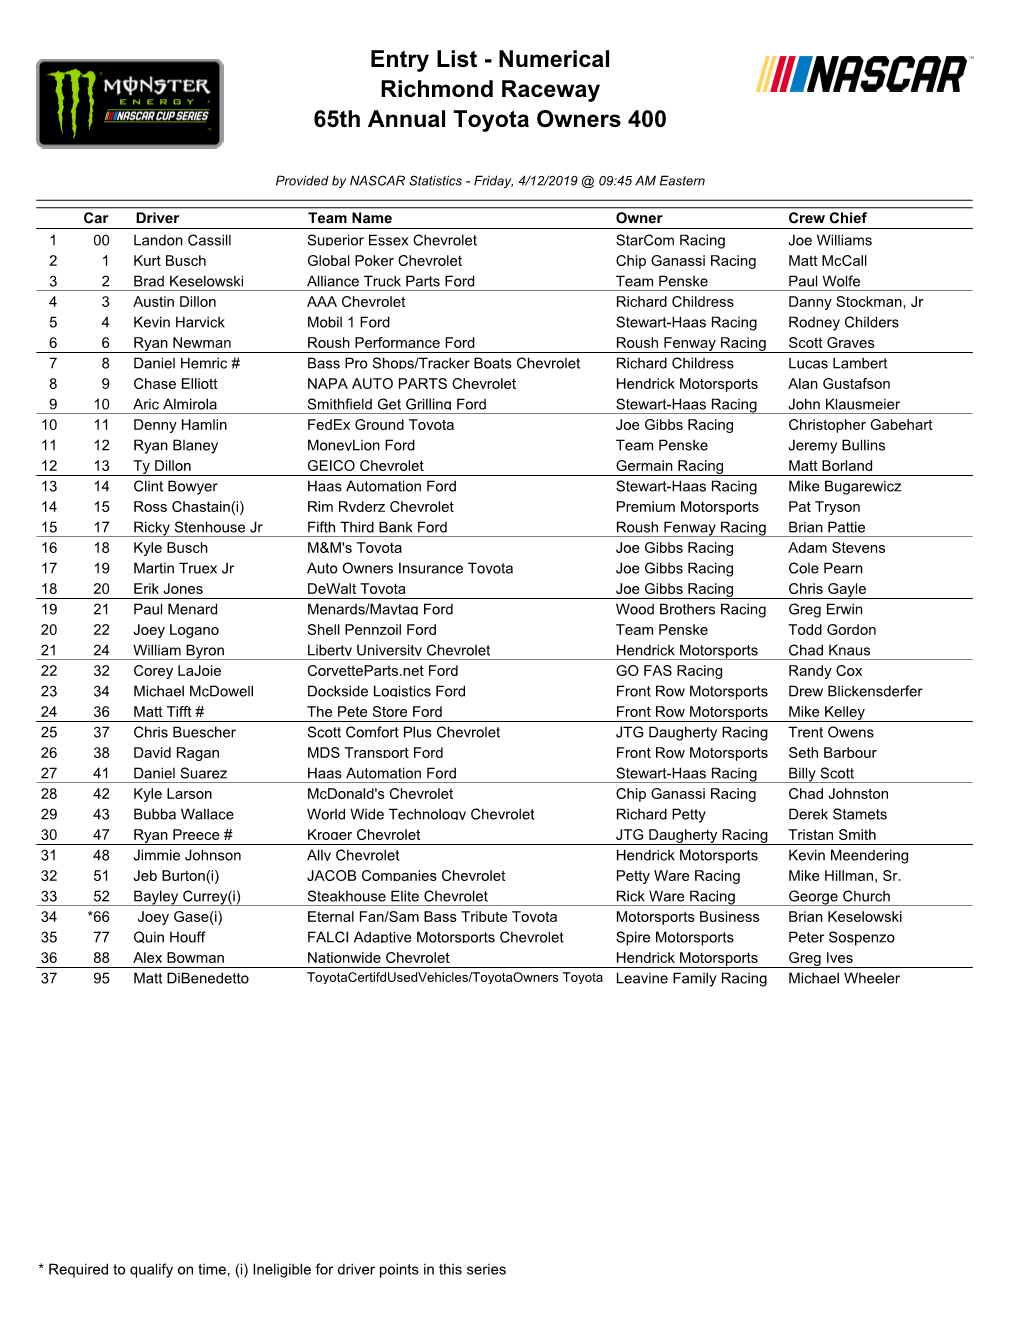 Entry List - Numerical Richmond Raceway 65Th Annual Toyota Owners 400